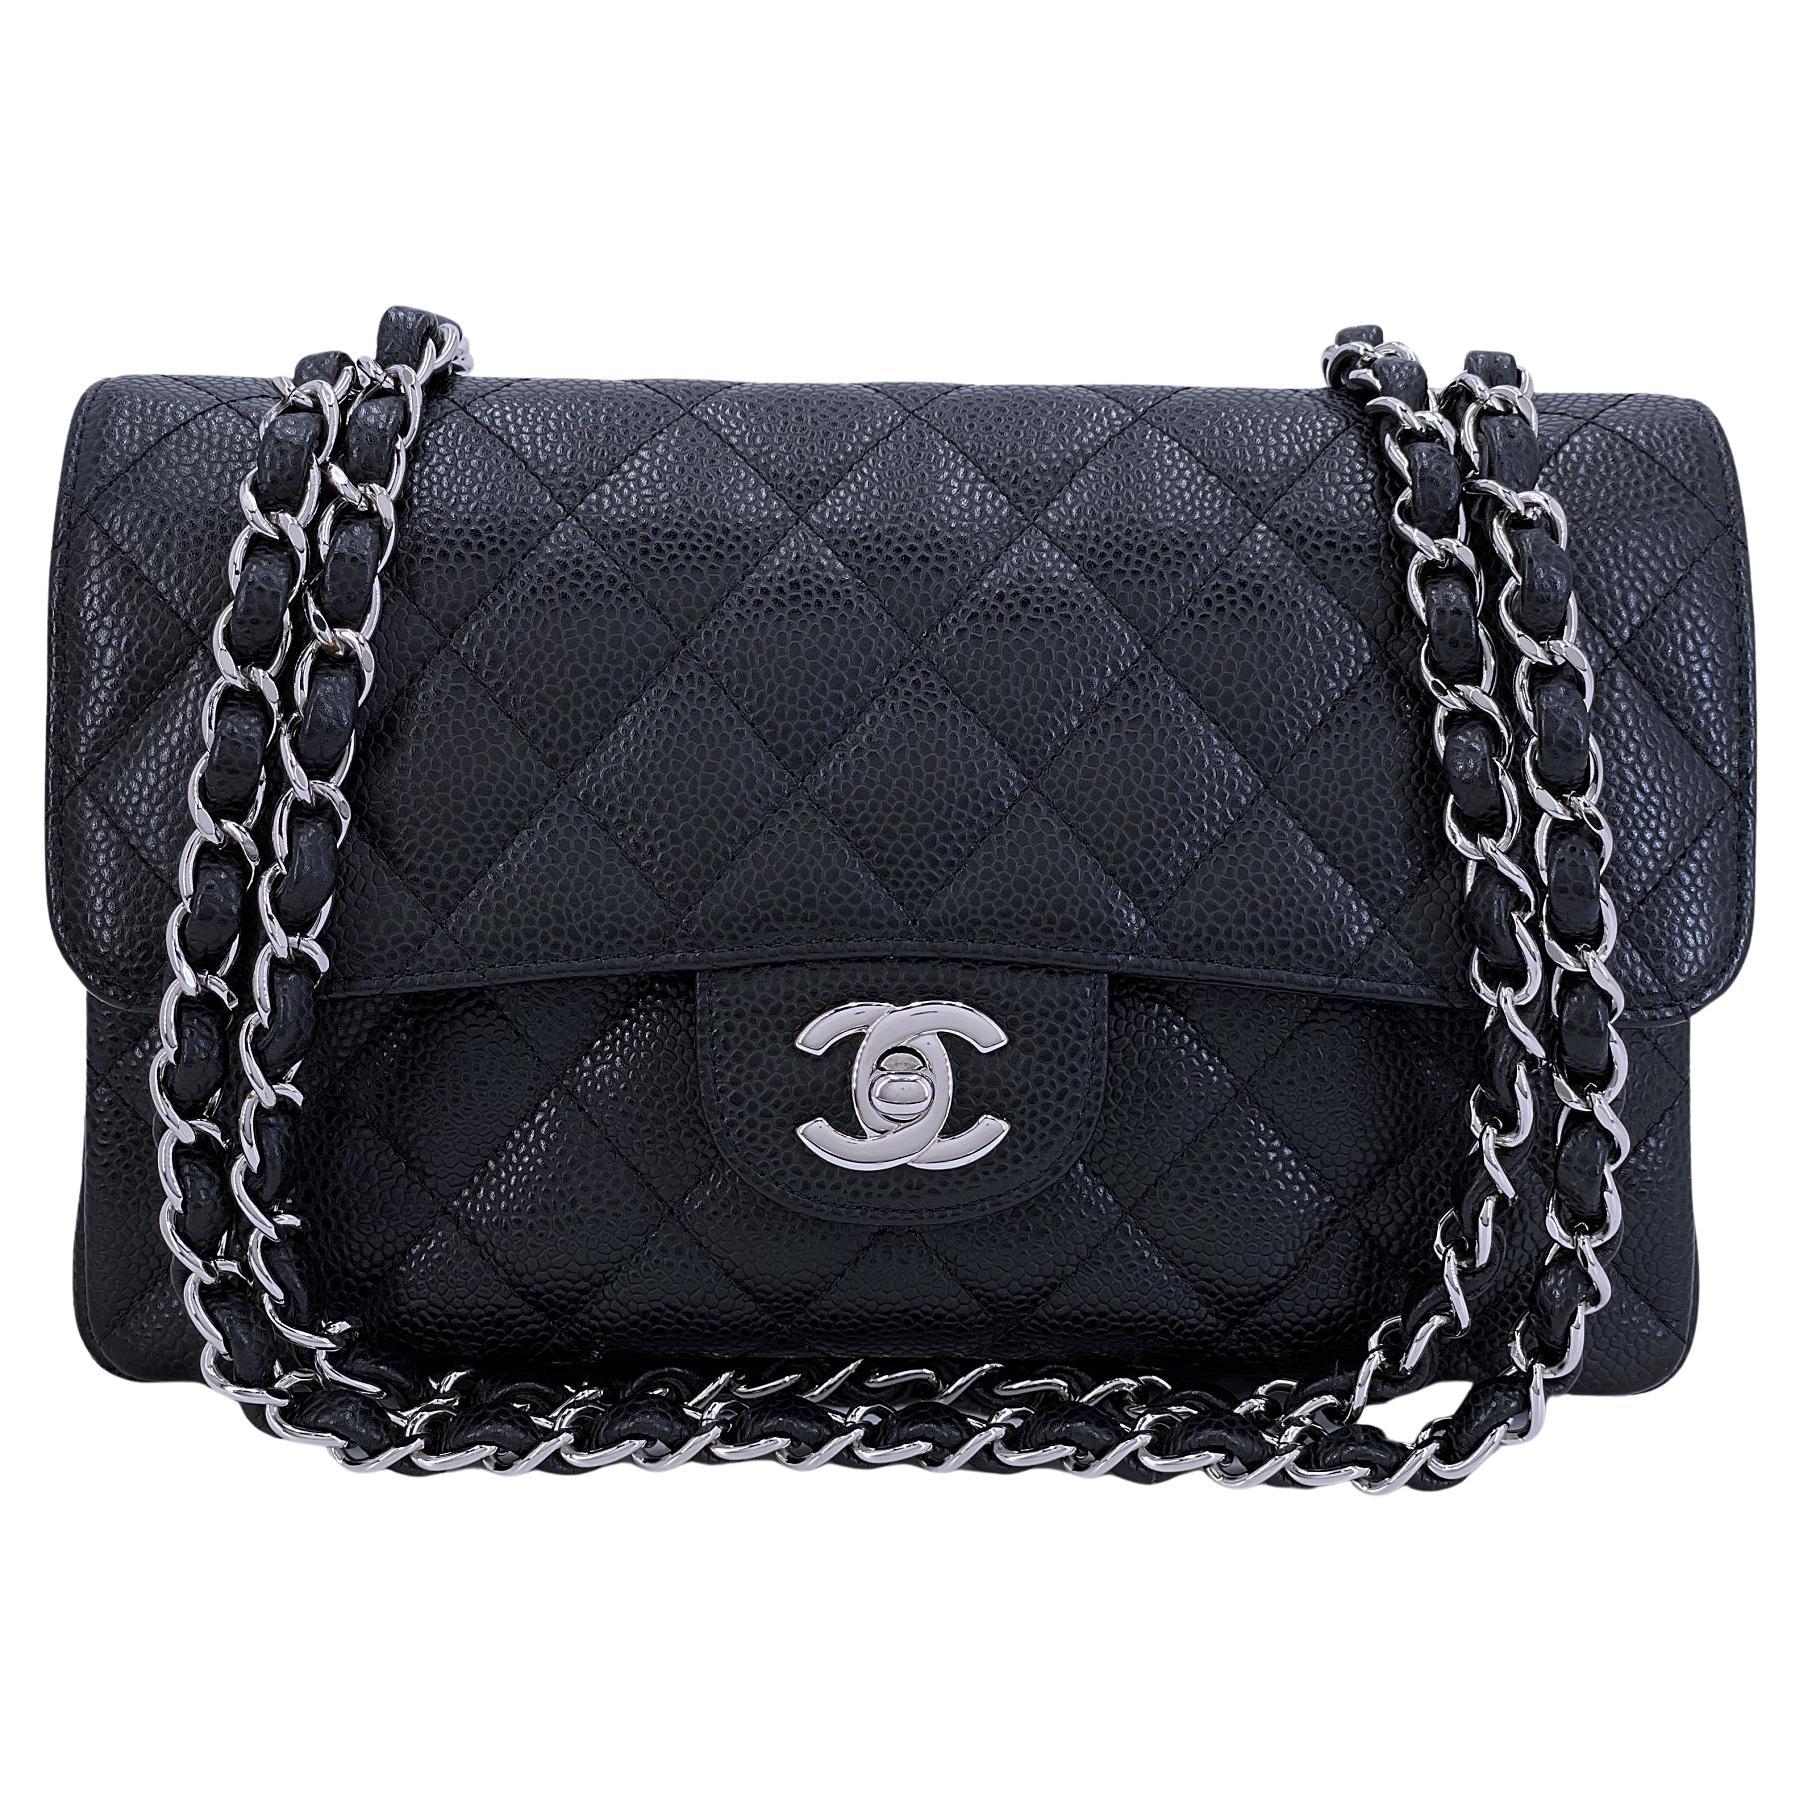 Chanel Black Caviar Small Classic Double Flap Bag SHW 67981 en vente